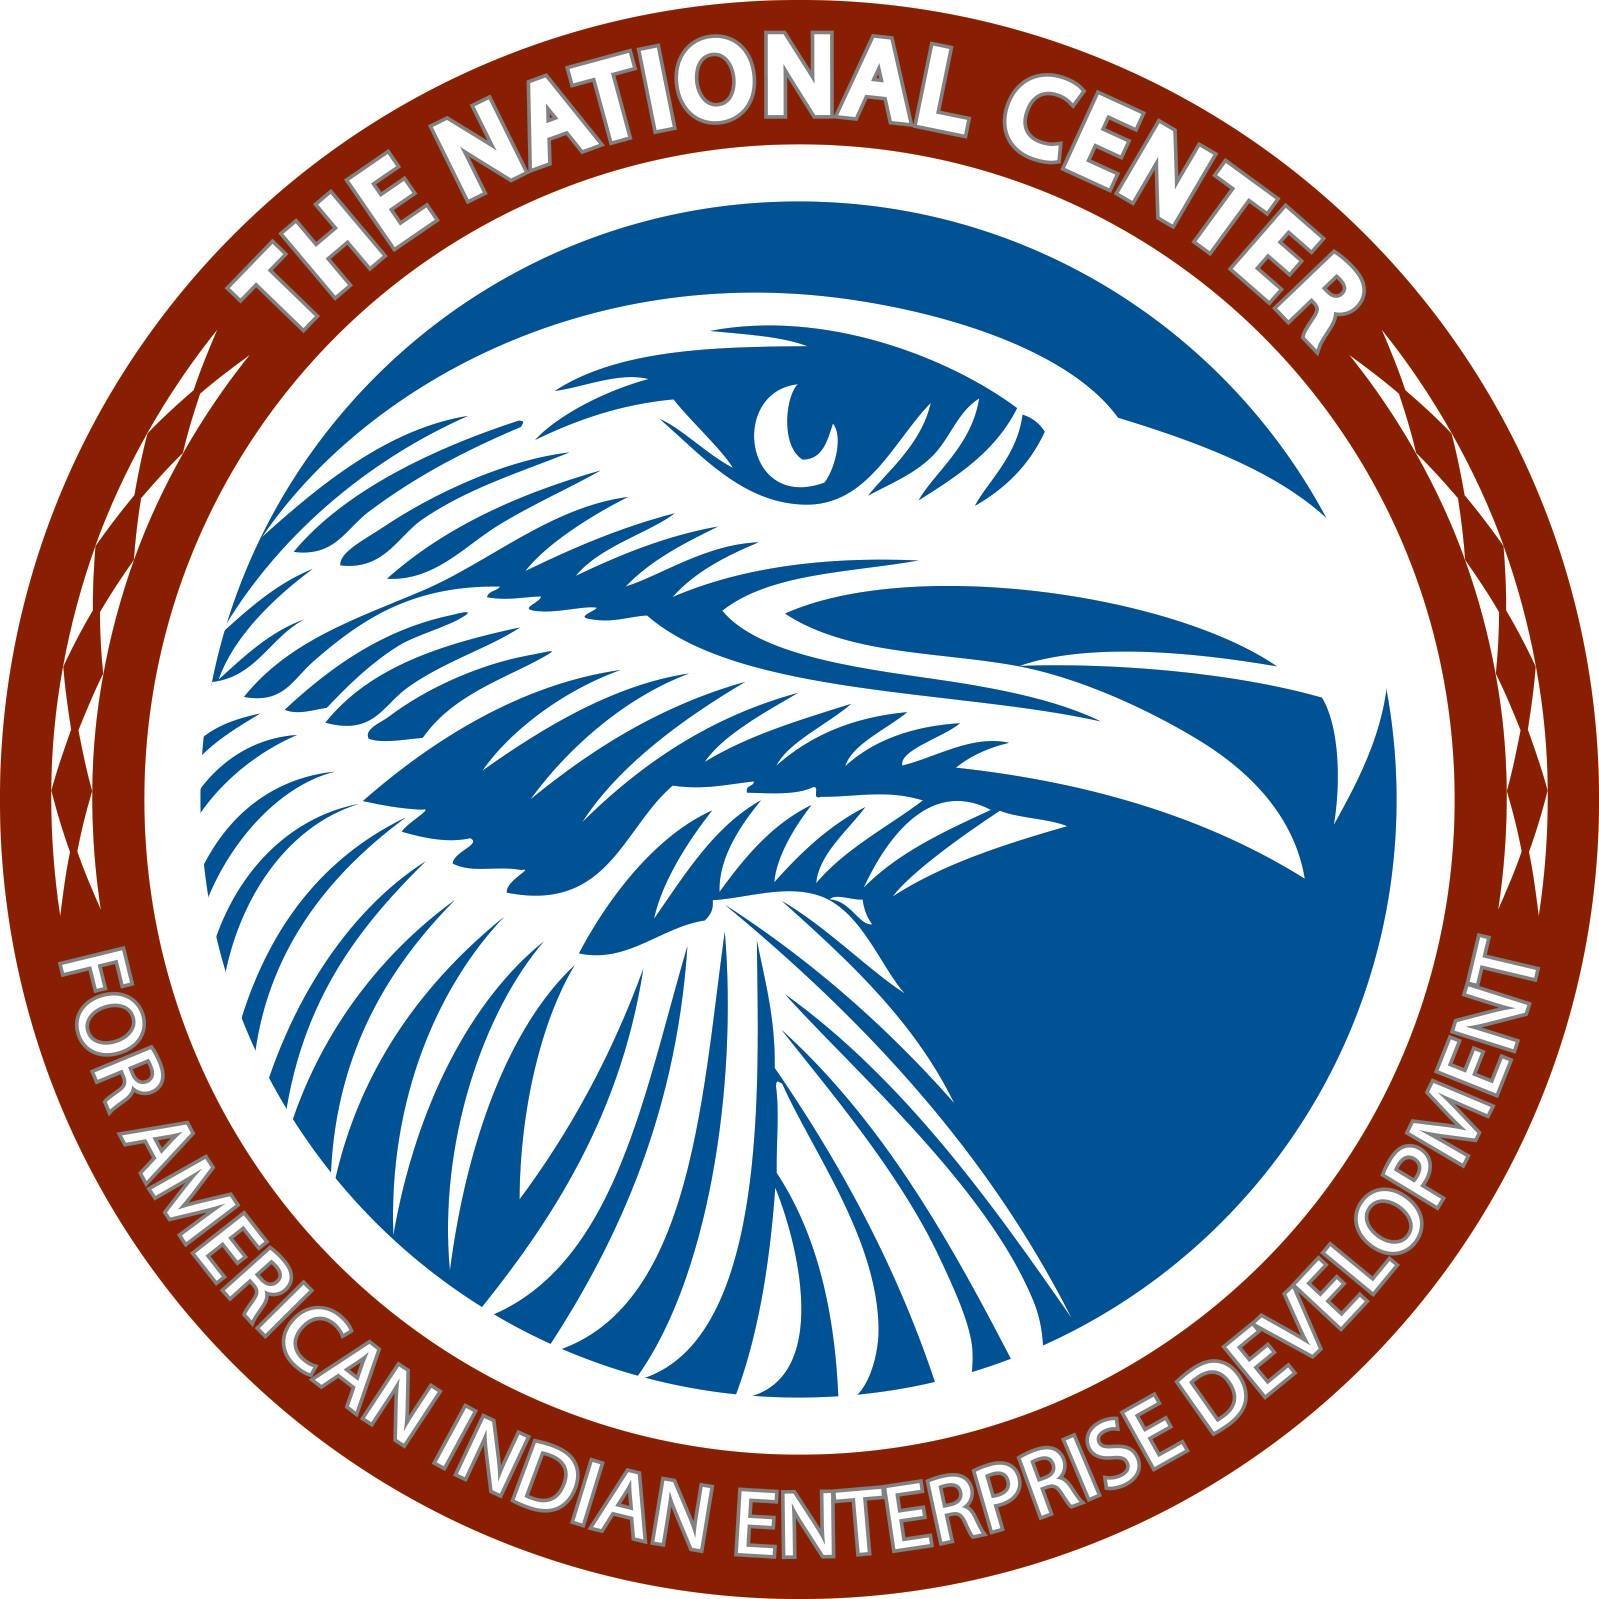 Native American Business Organization in USA - National Center for American Indian Enterprise Development